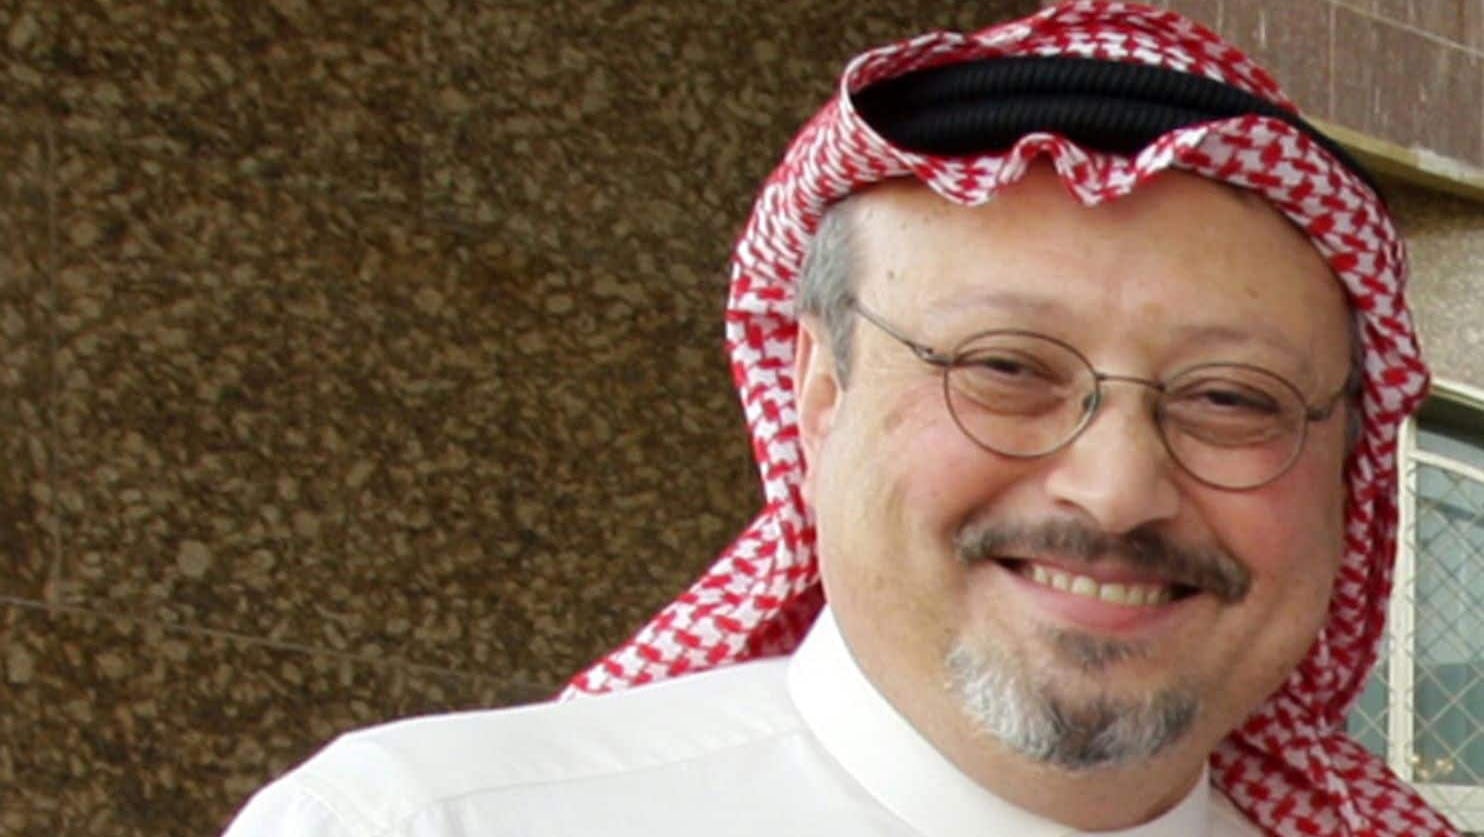 El columnista de The Washington Post, Jamal Khashoggi, se autoexilió en Estados Unidos por miedo a represalia del reino de Arabia Saudita.